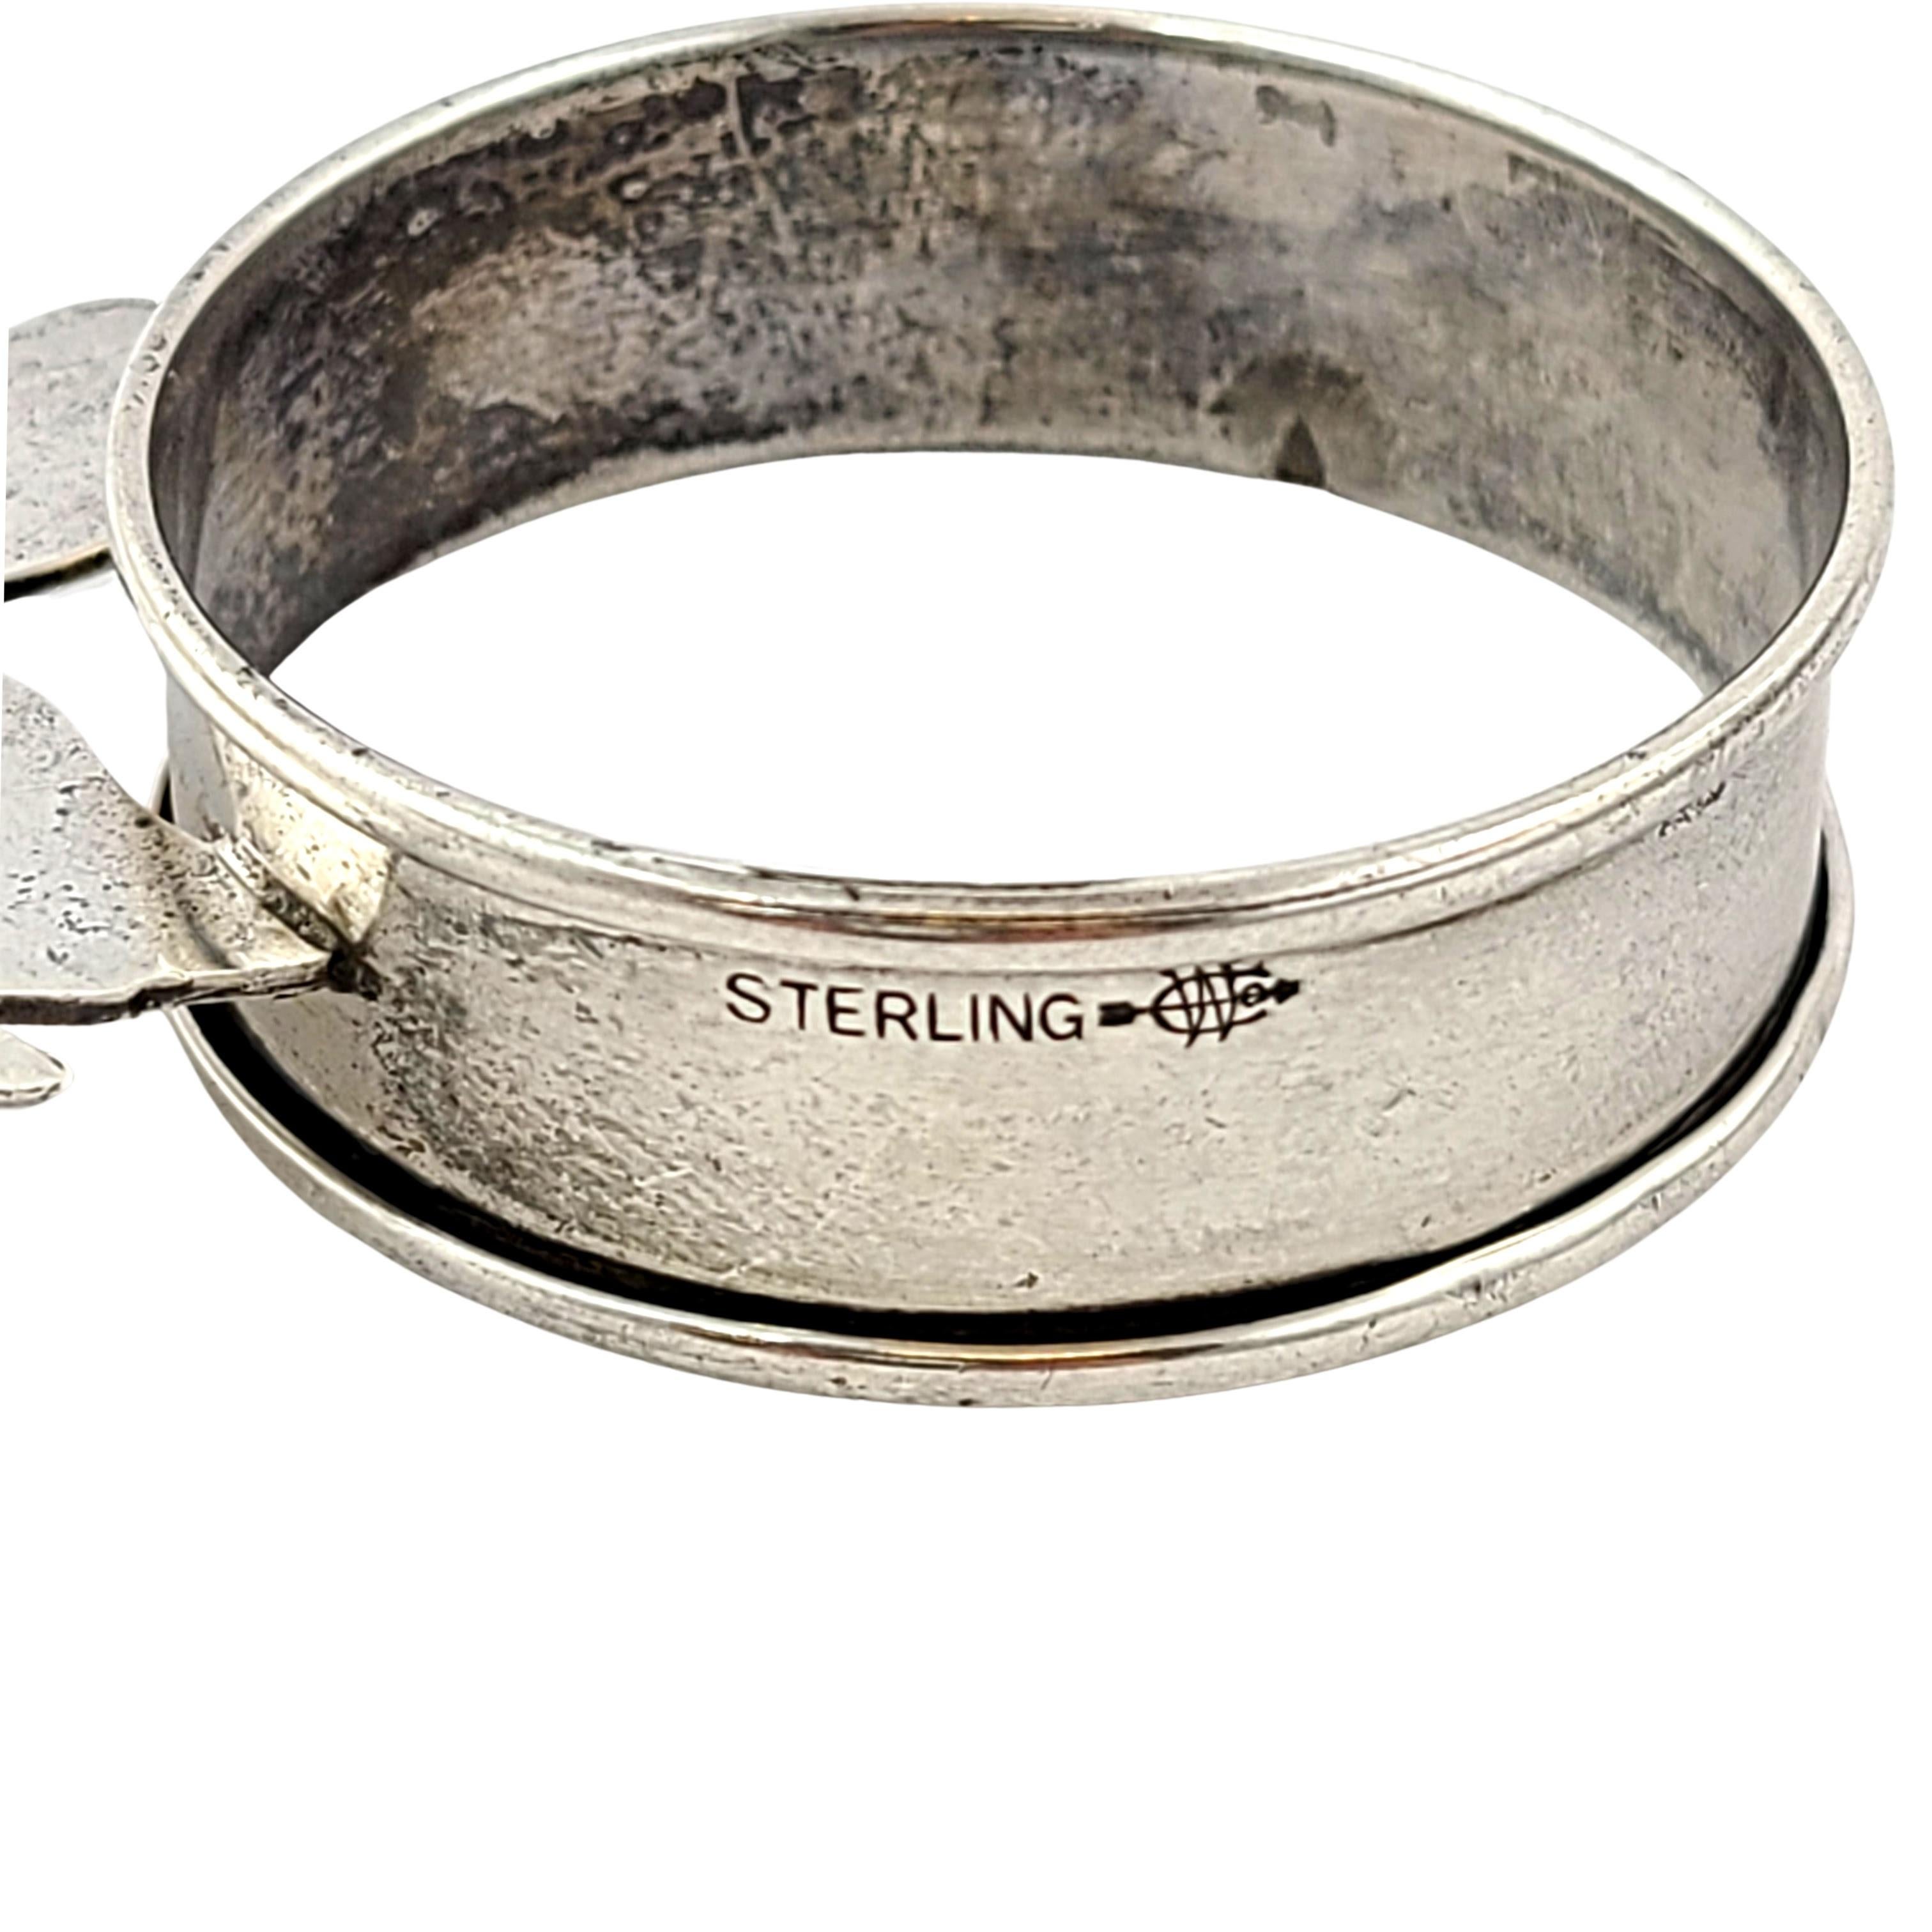 Webster Co Sterling Silver Duck Napkin Ring 2